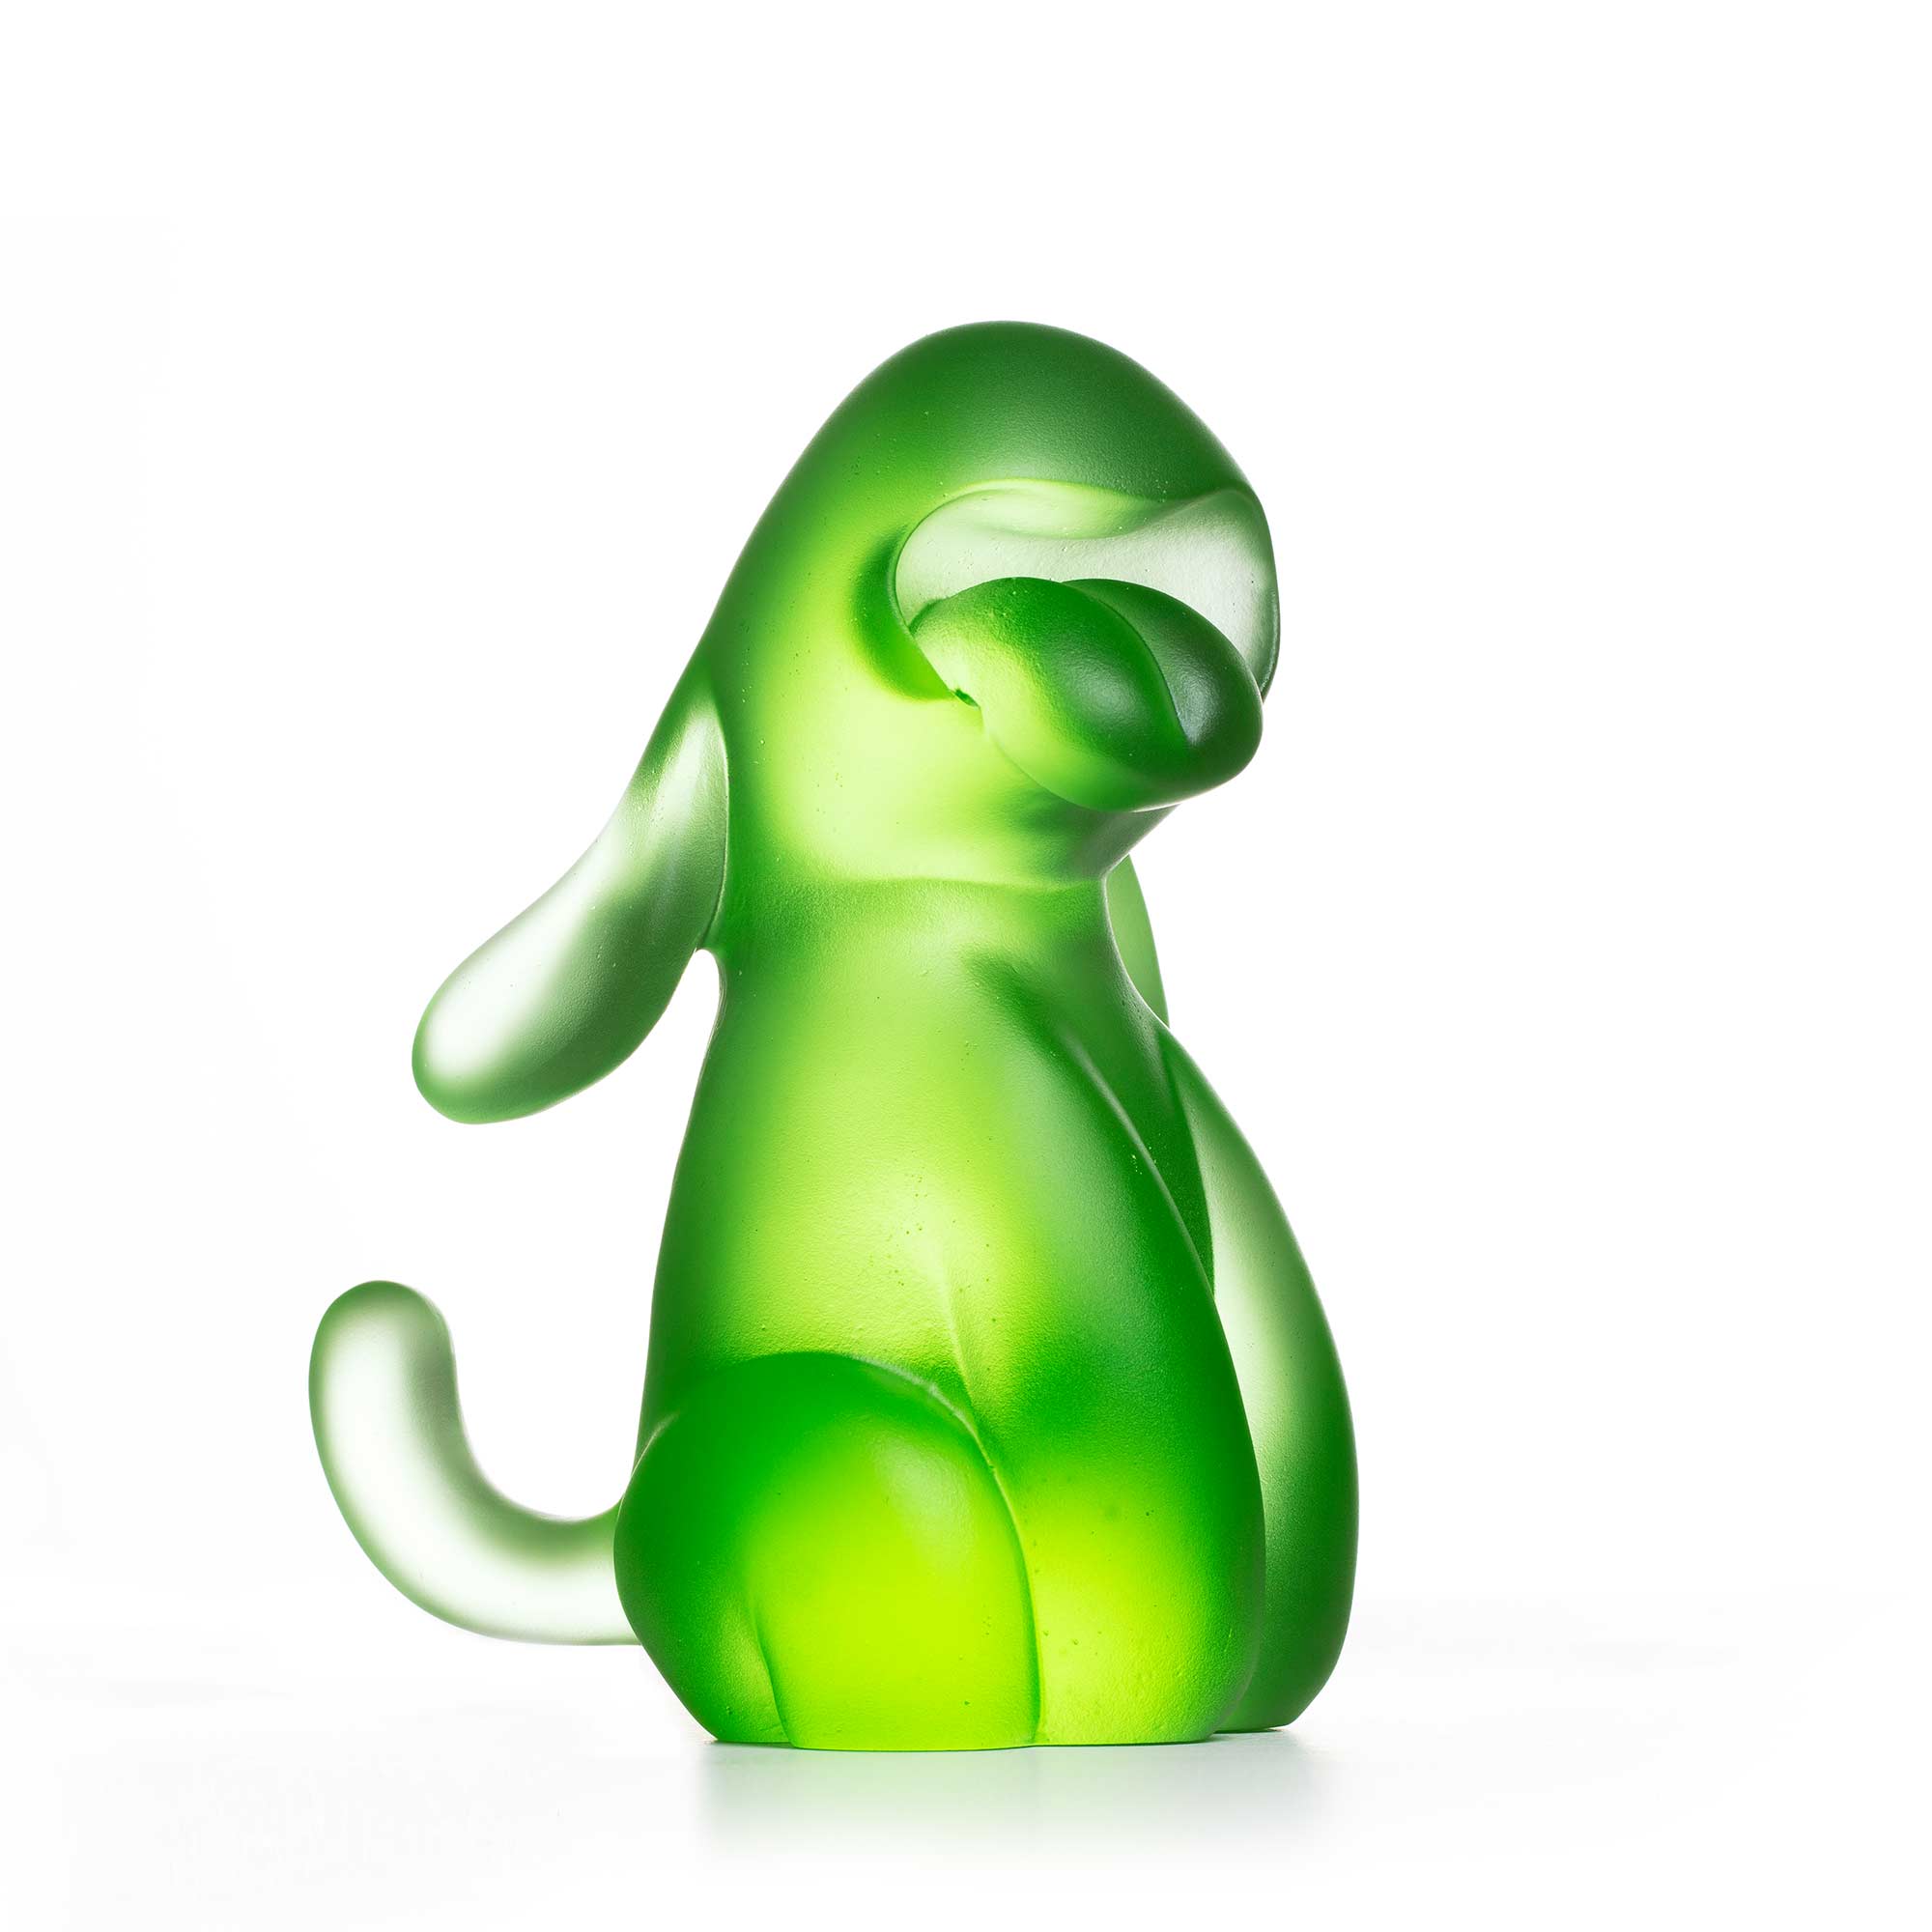 Dog Roar, green crystal sculpture, limited edition by artist Ferdi B Dick, hero view